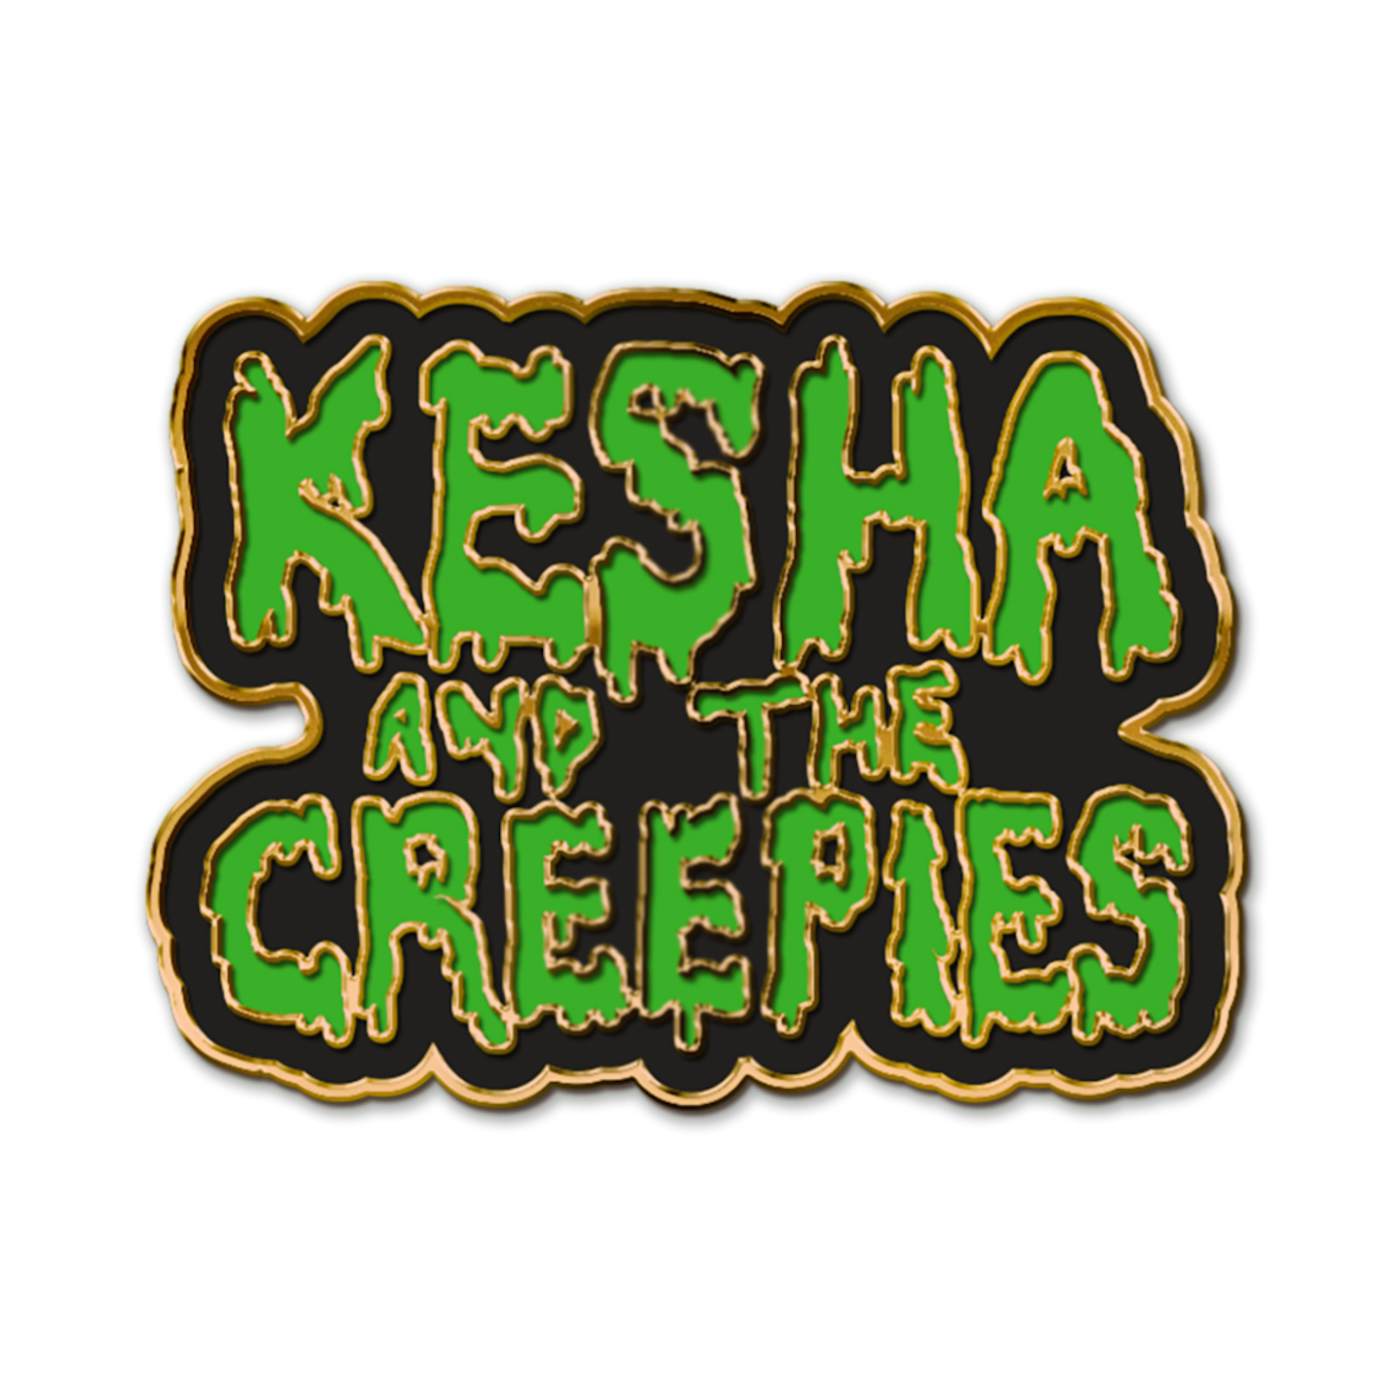 Kesha and the Creepies Enamel Pin